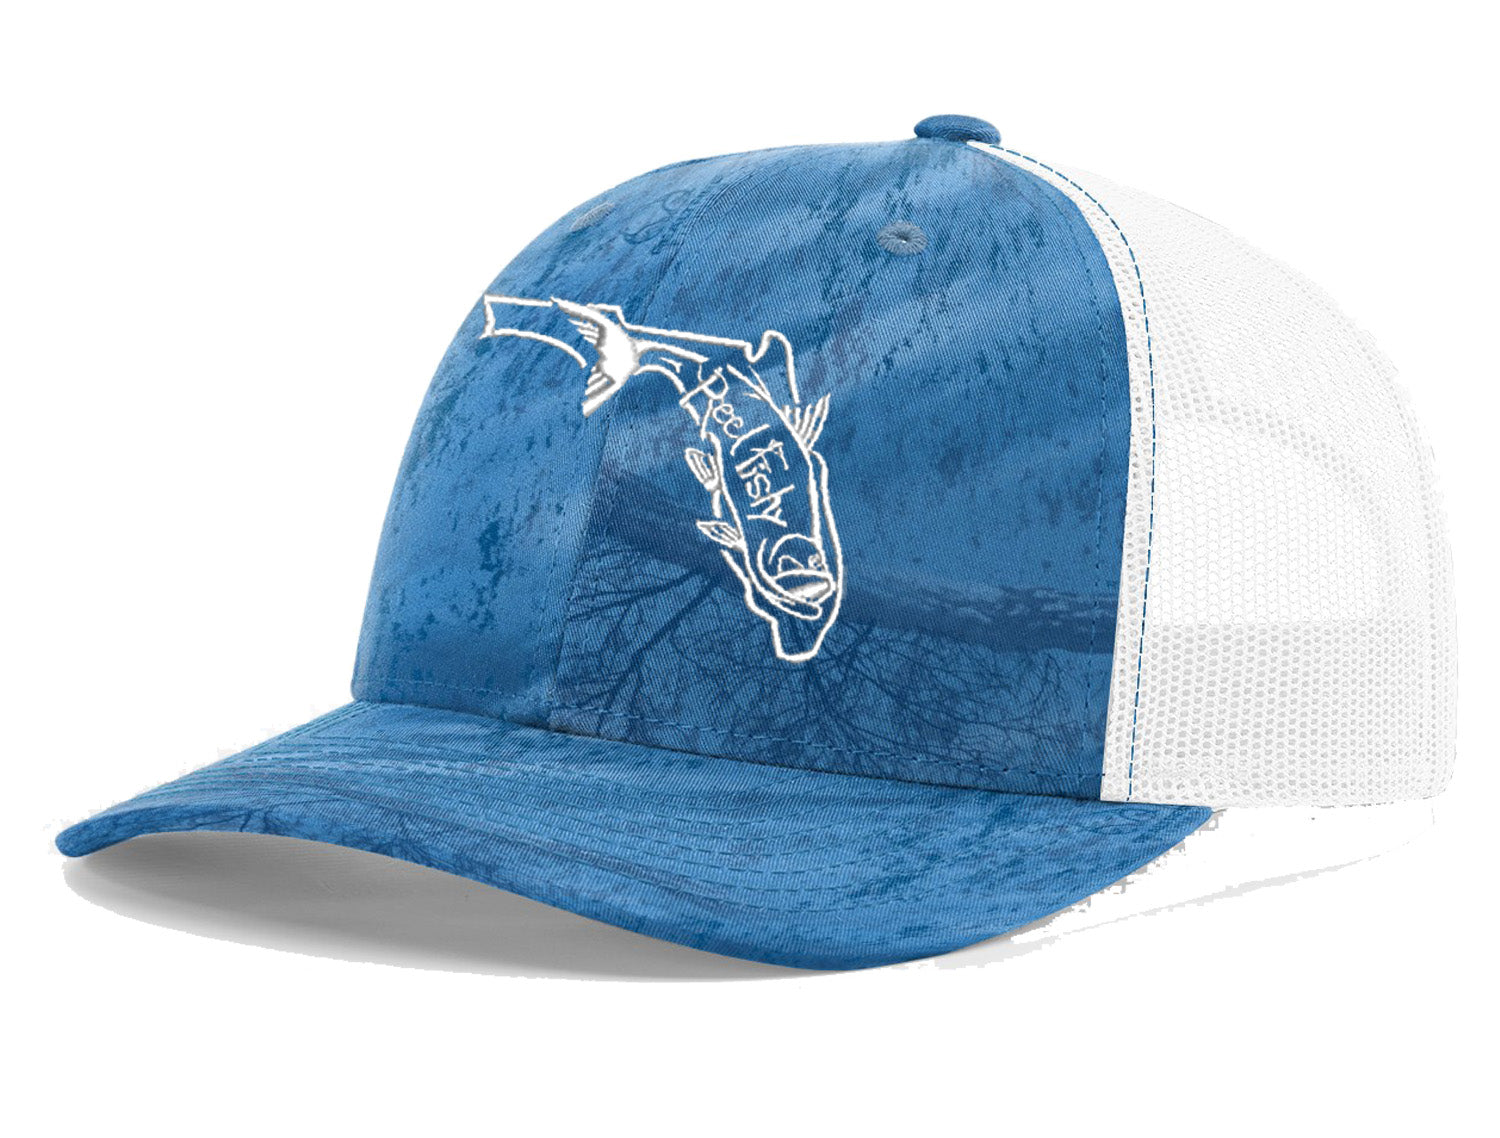 Realtree Blue/White Trucker Hat - State of Florida Reel Fishy Tarpon logo